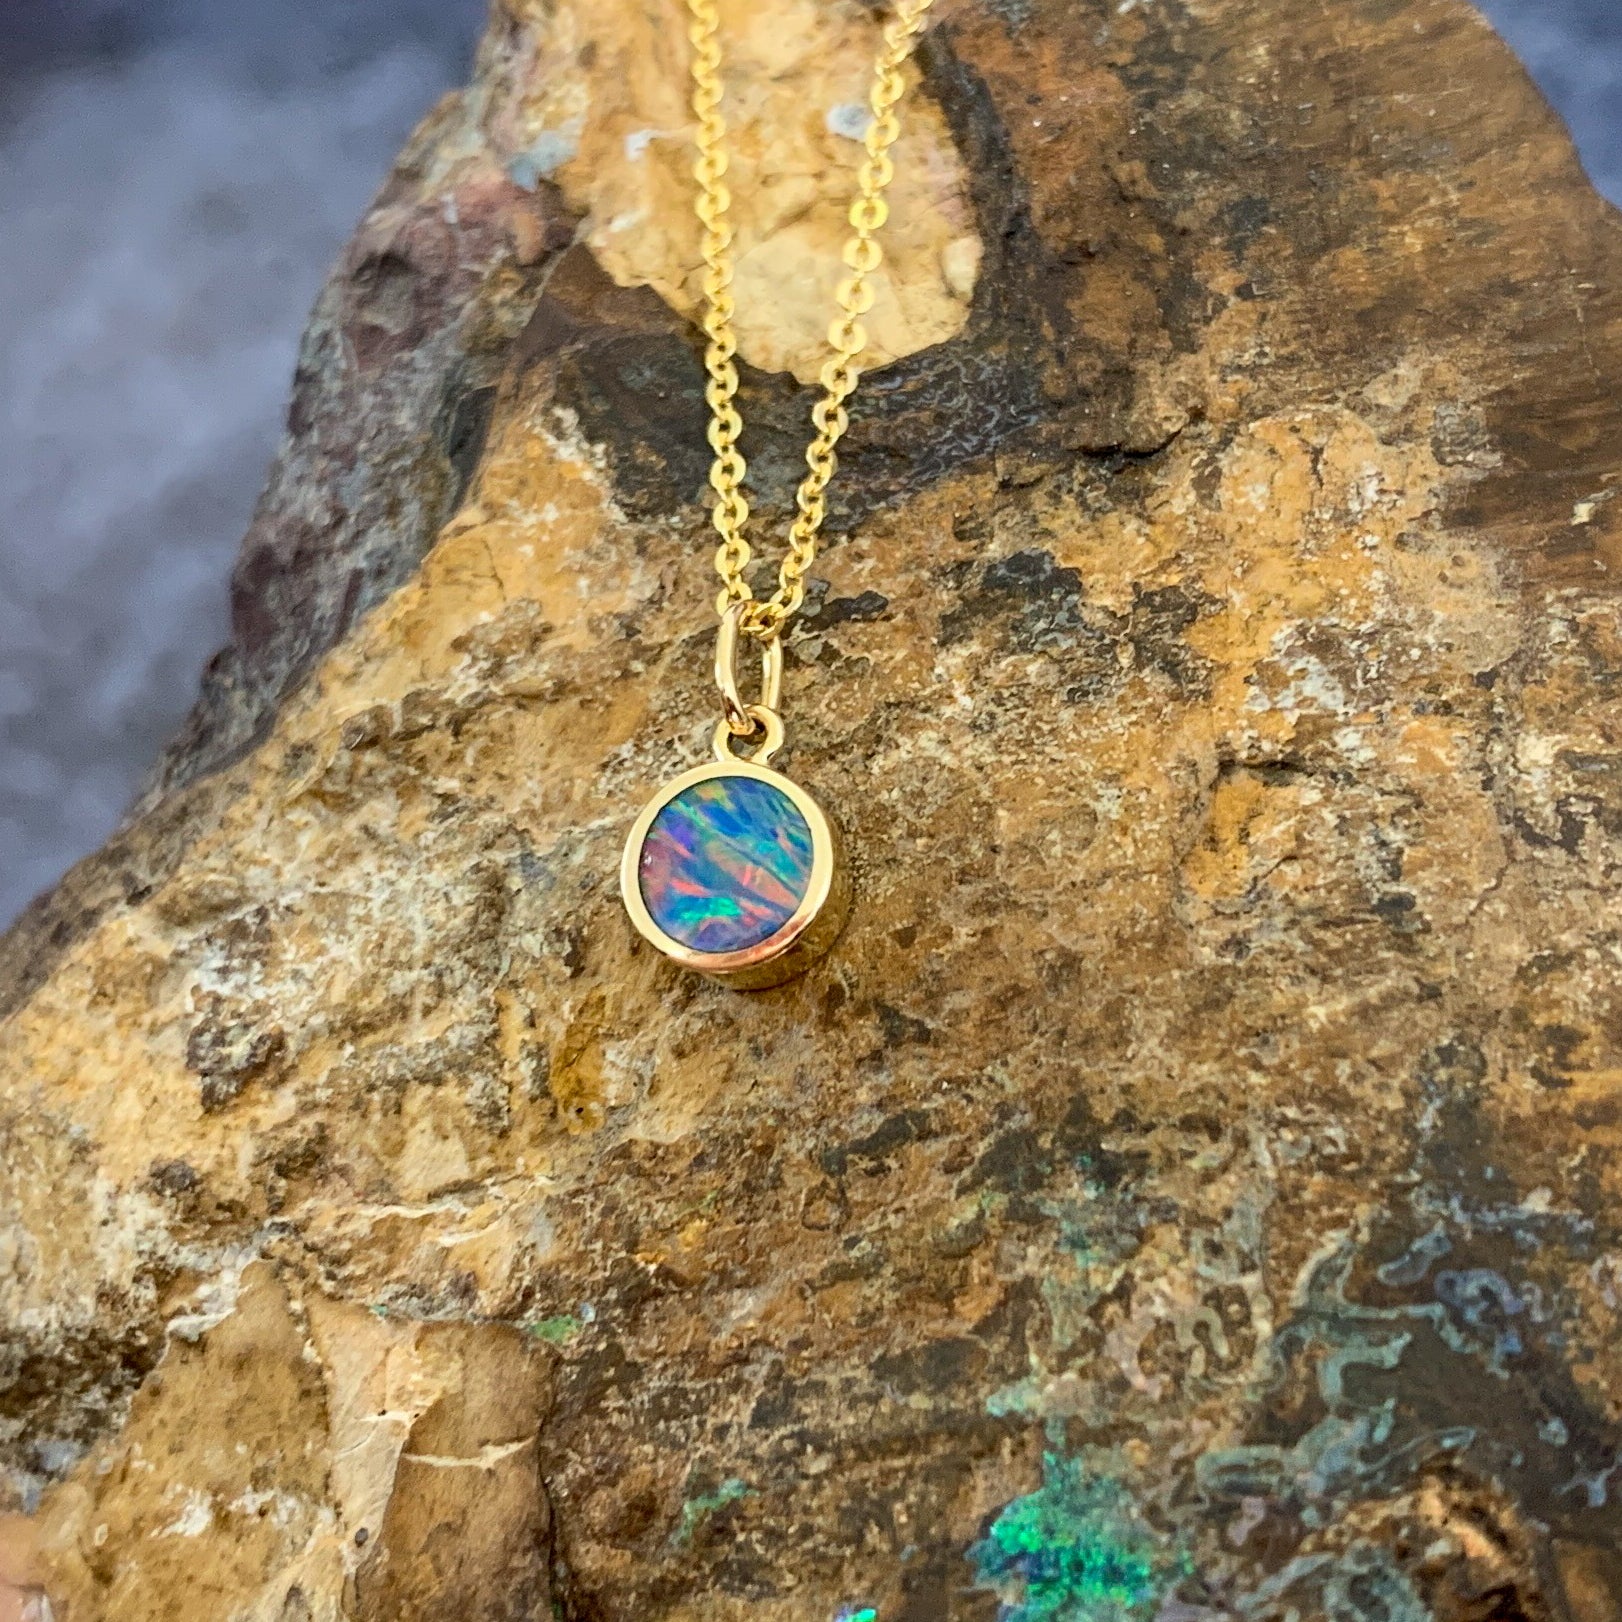 14kt Yellow Gold 5.7mm Round Opal doublet pendant - Masterpiece Jewellery Opal & Gems Sydney Australia | Online Shop